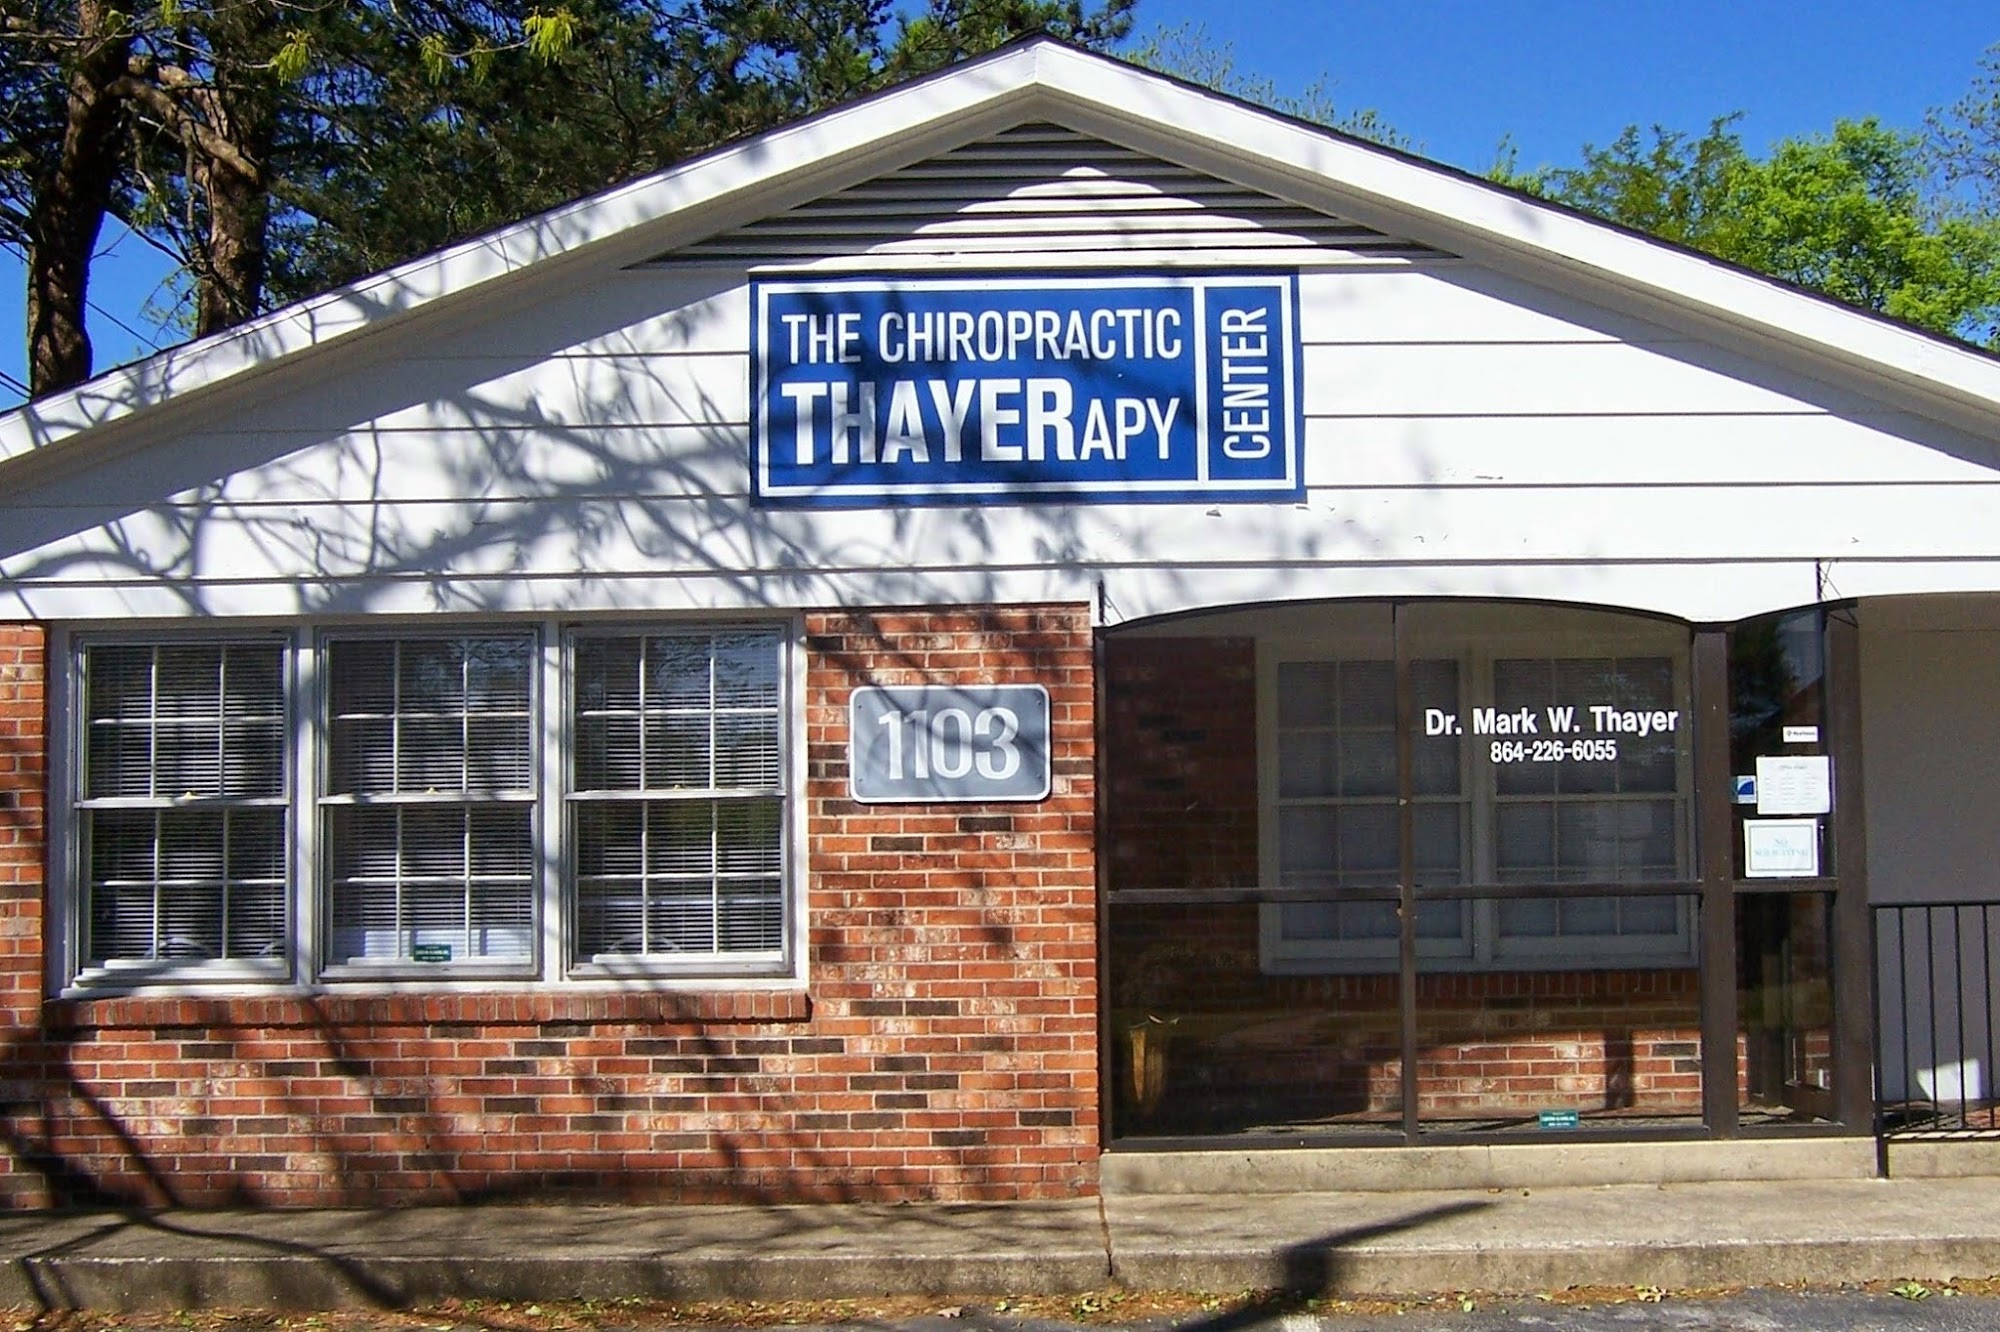 Chiropractic Thayerapy Center